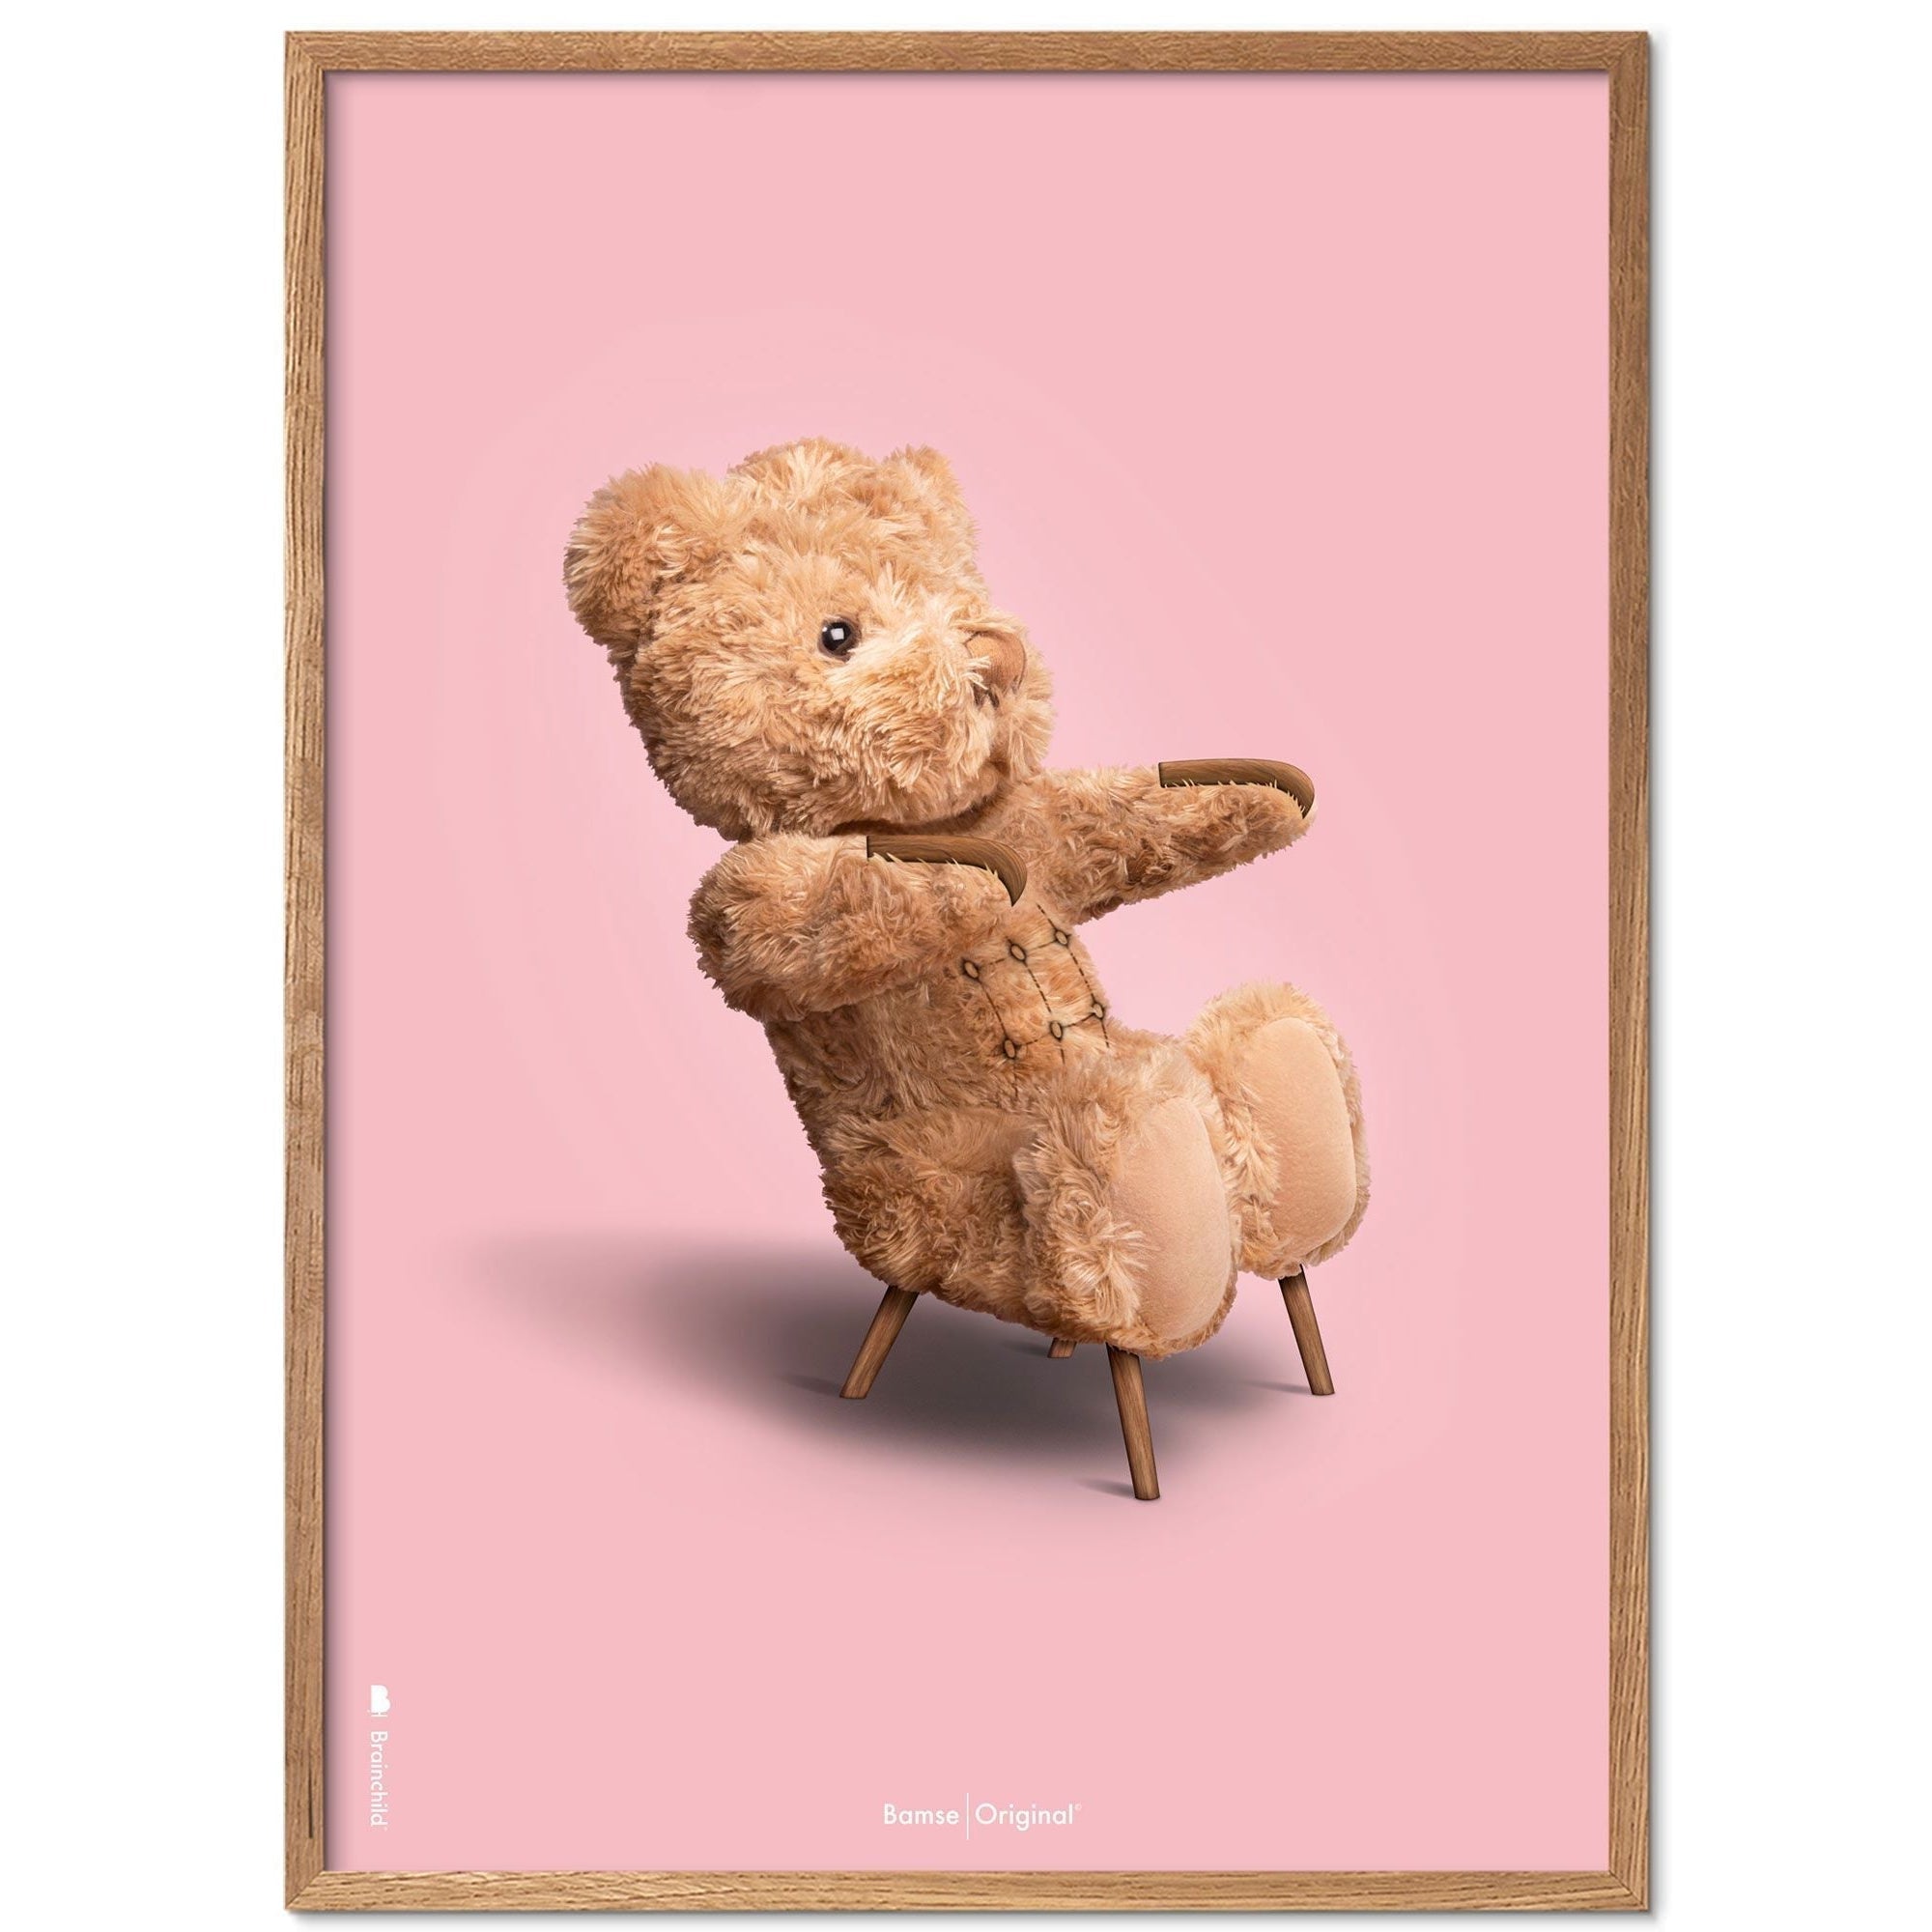 Brainchild Teddybär Classic Posterrahmen aus hellem Holz Ramme 70x100 Cm, rosa Hintergrund